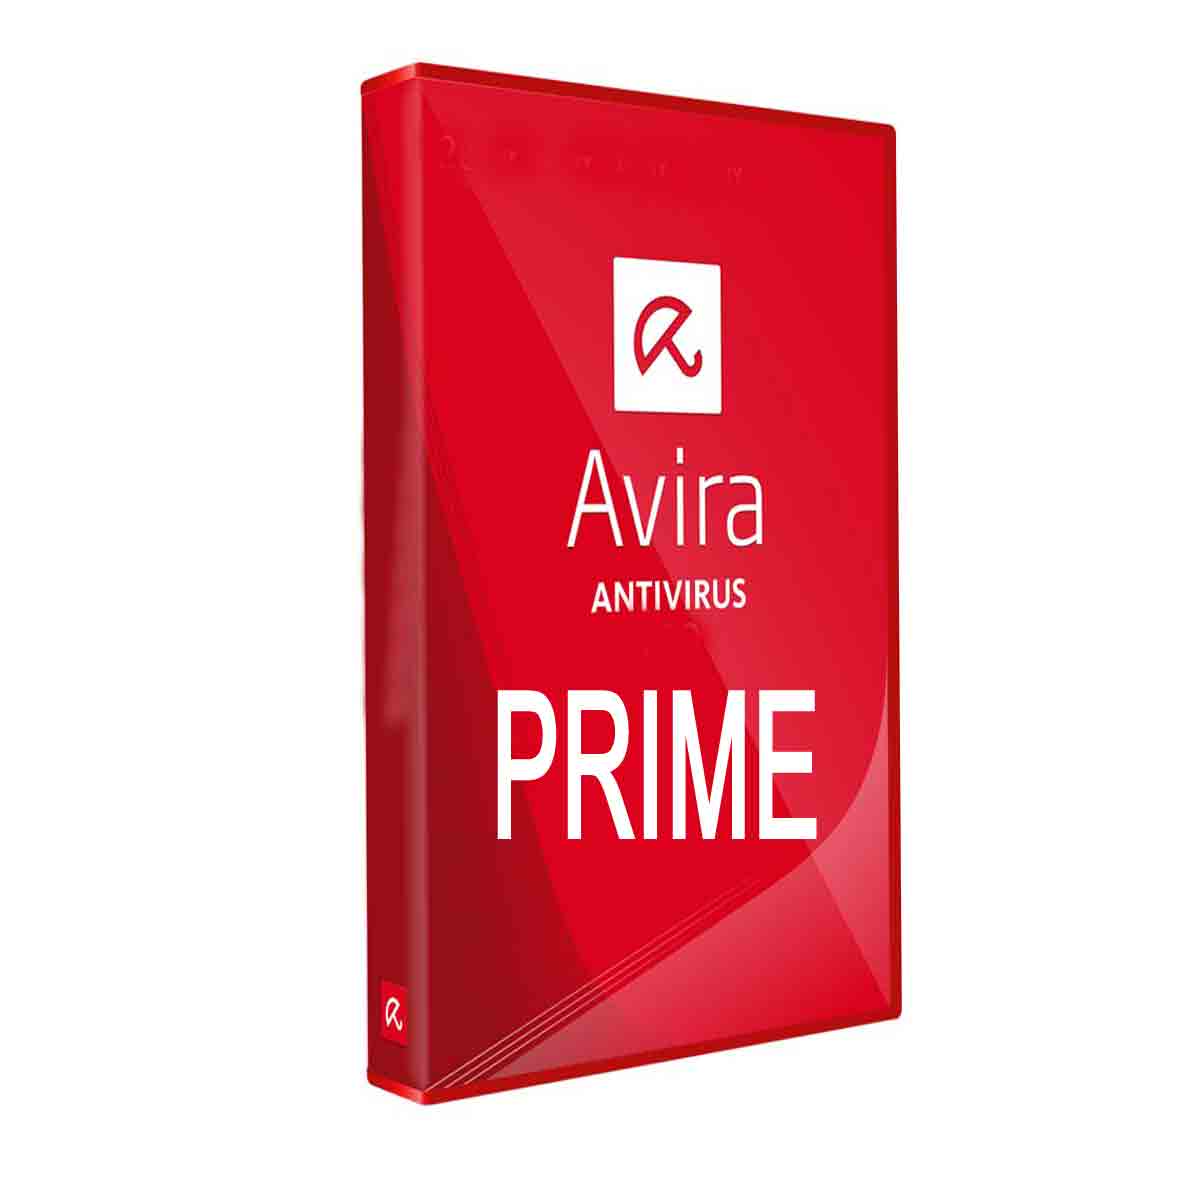 Buy Avira Prime License Key - 0800-090-3222 - Avira Serial Key